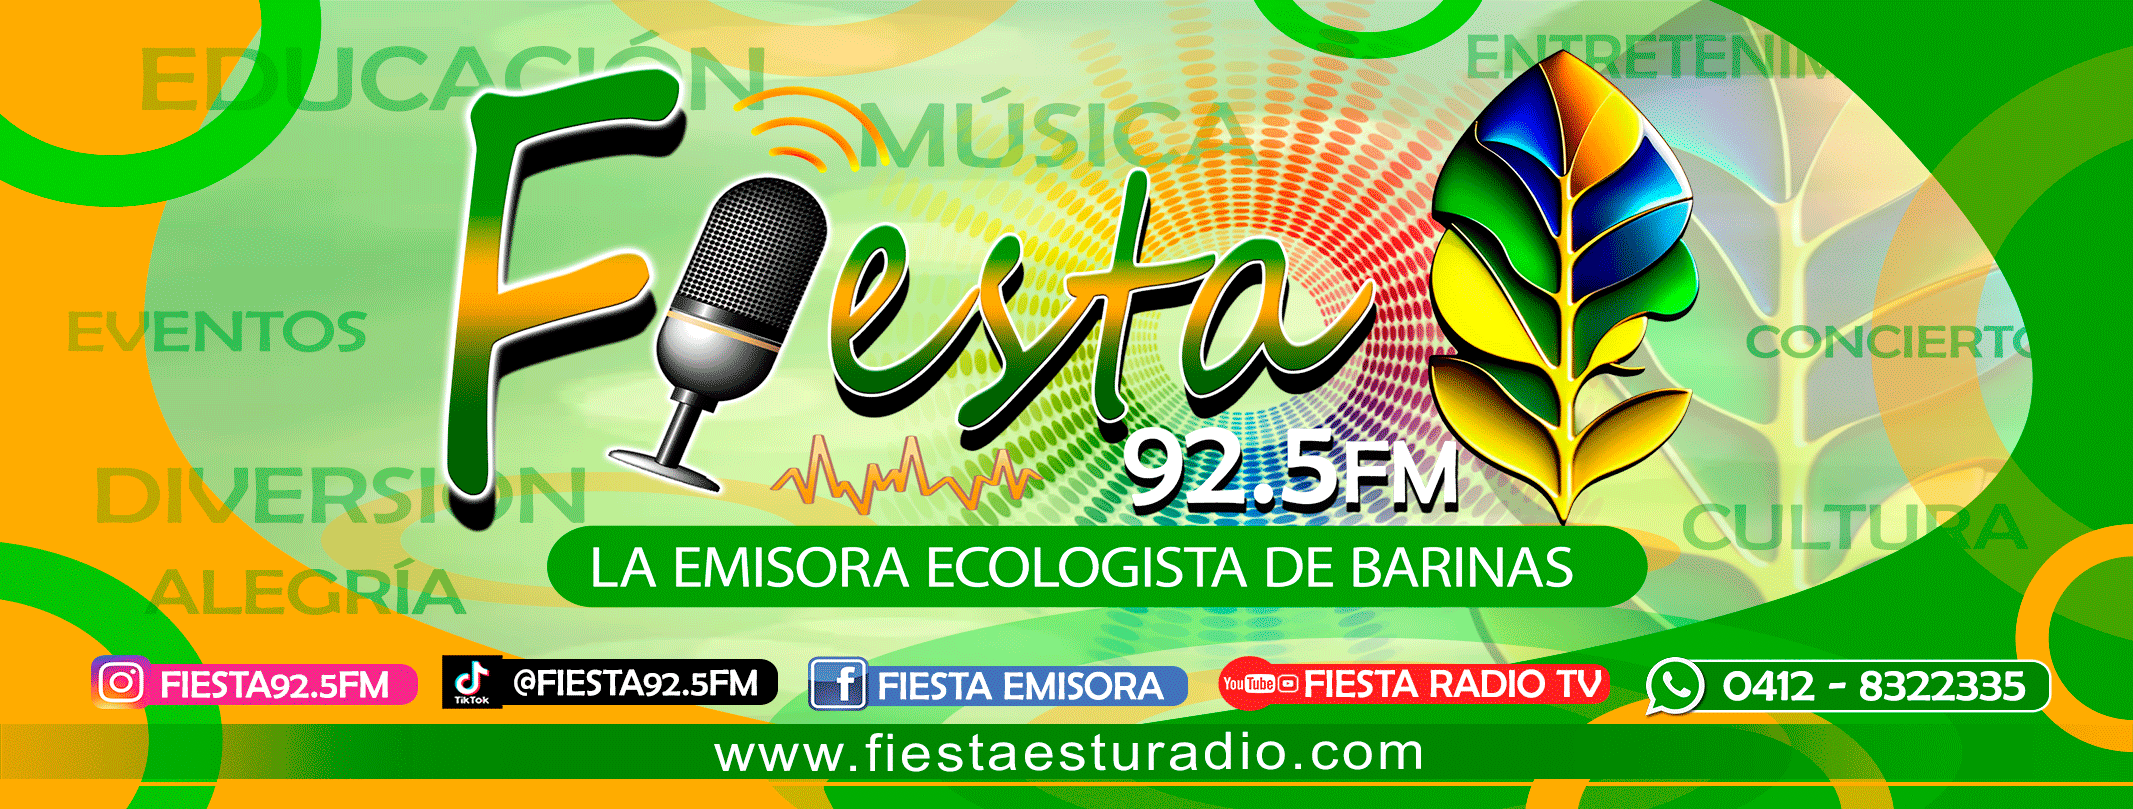 fiesta 952 fm Barinas Venezuela radio tv